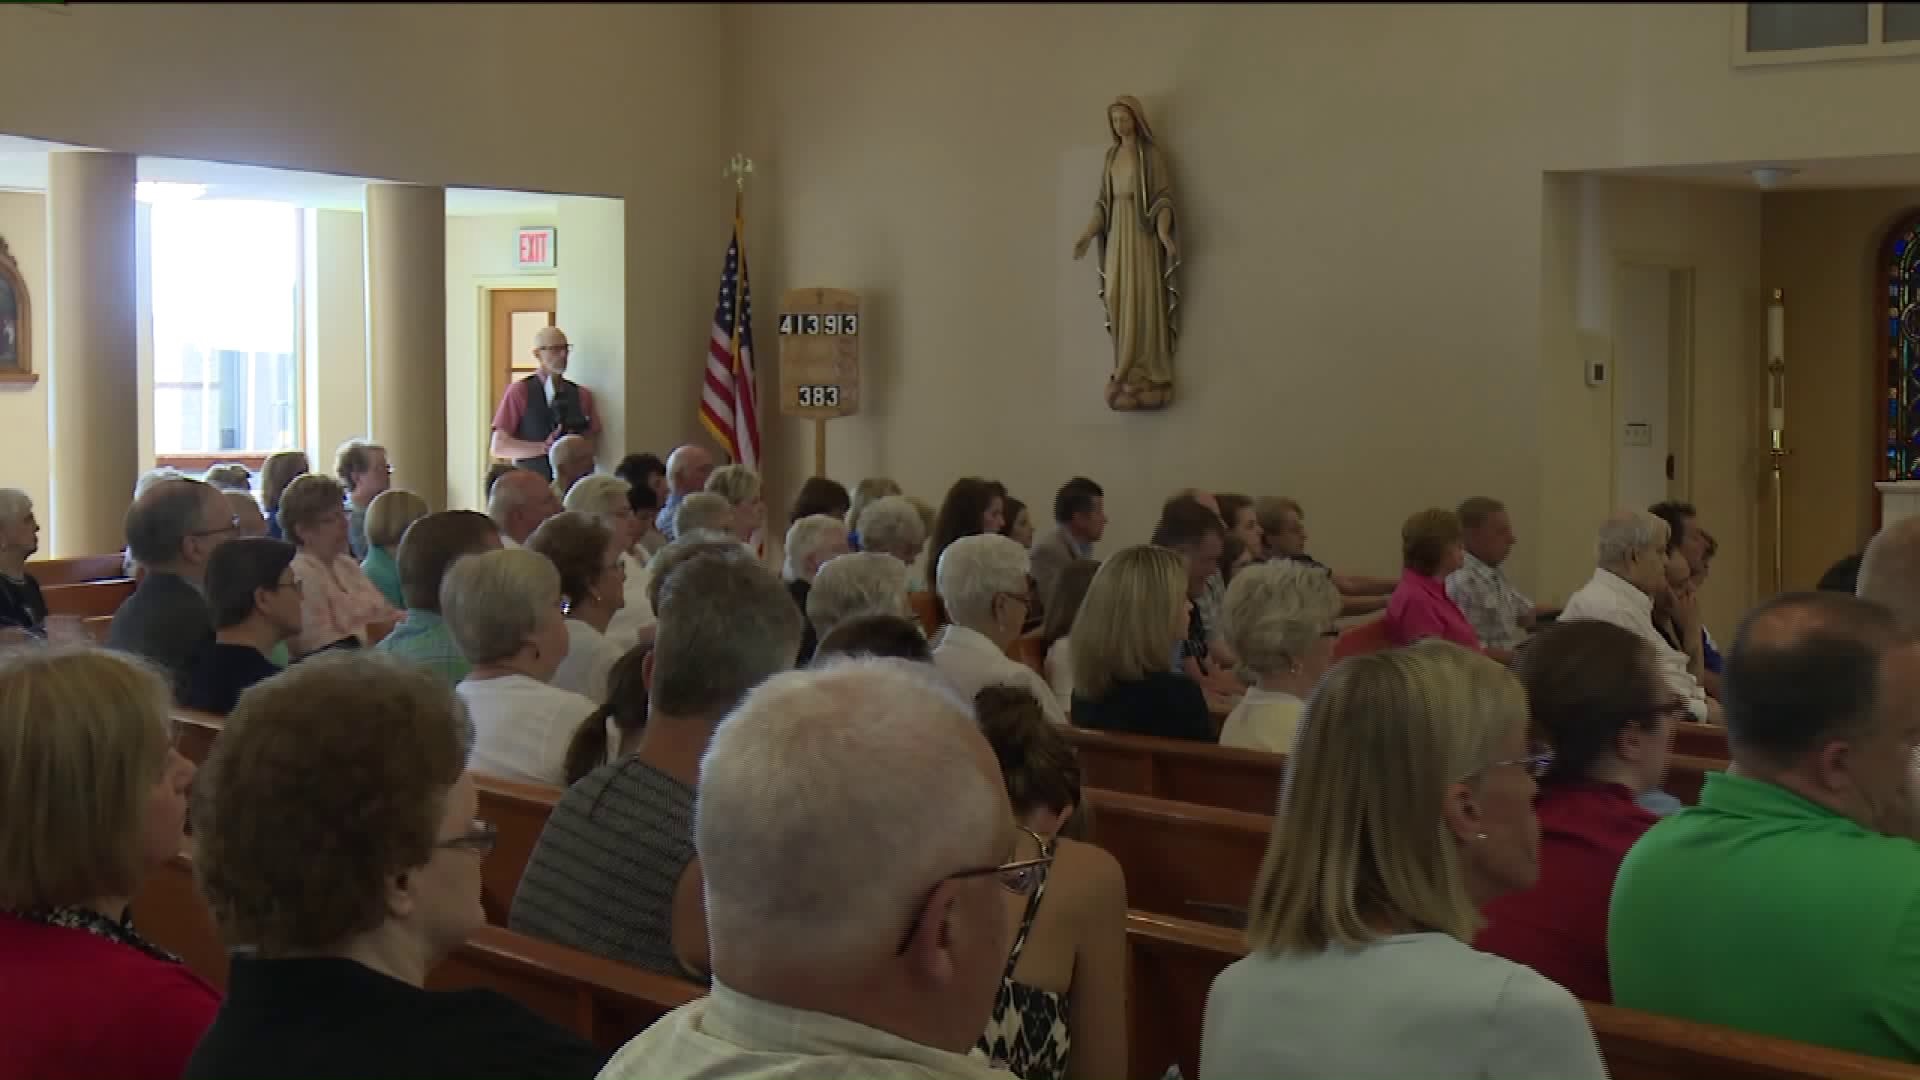 Catholic Church Celebrates Expansion in Lackawanna County